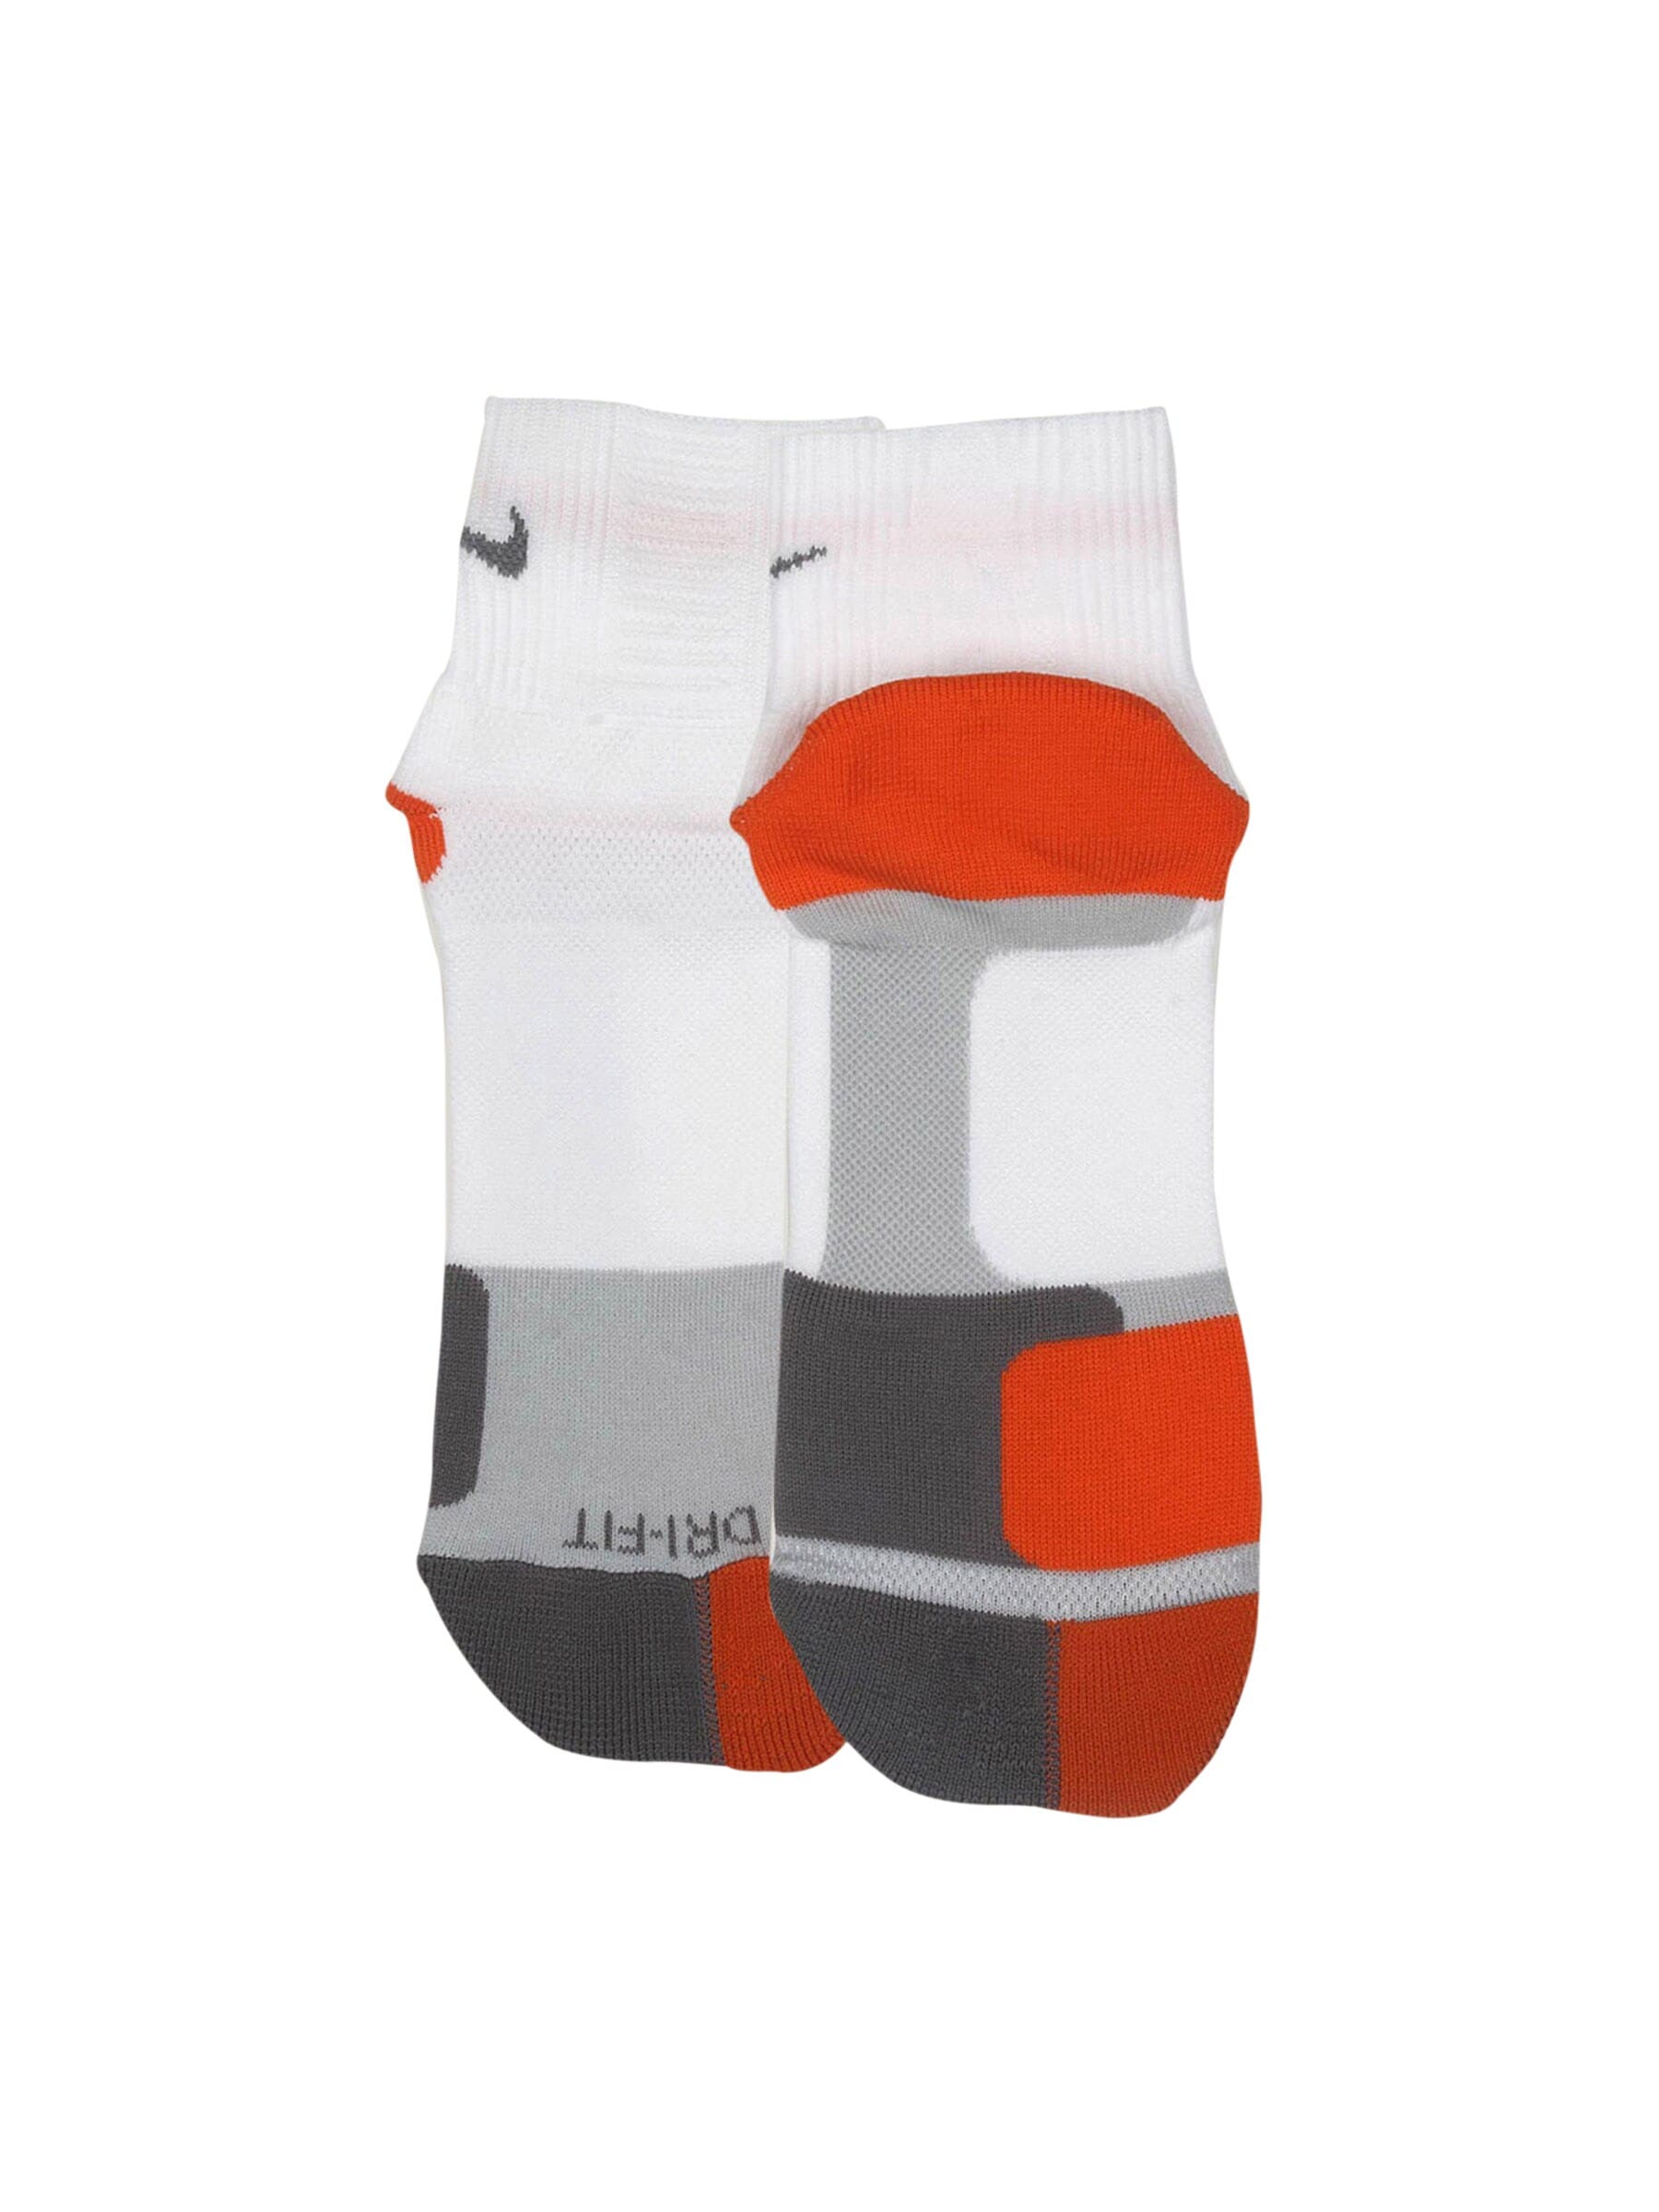 Nike Men's New Elit White Orange Grey Socks